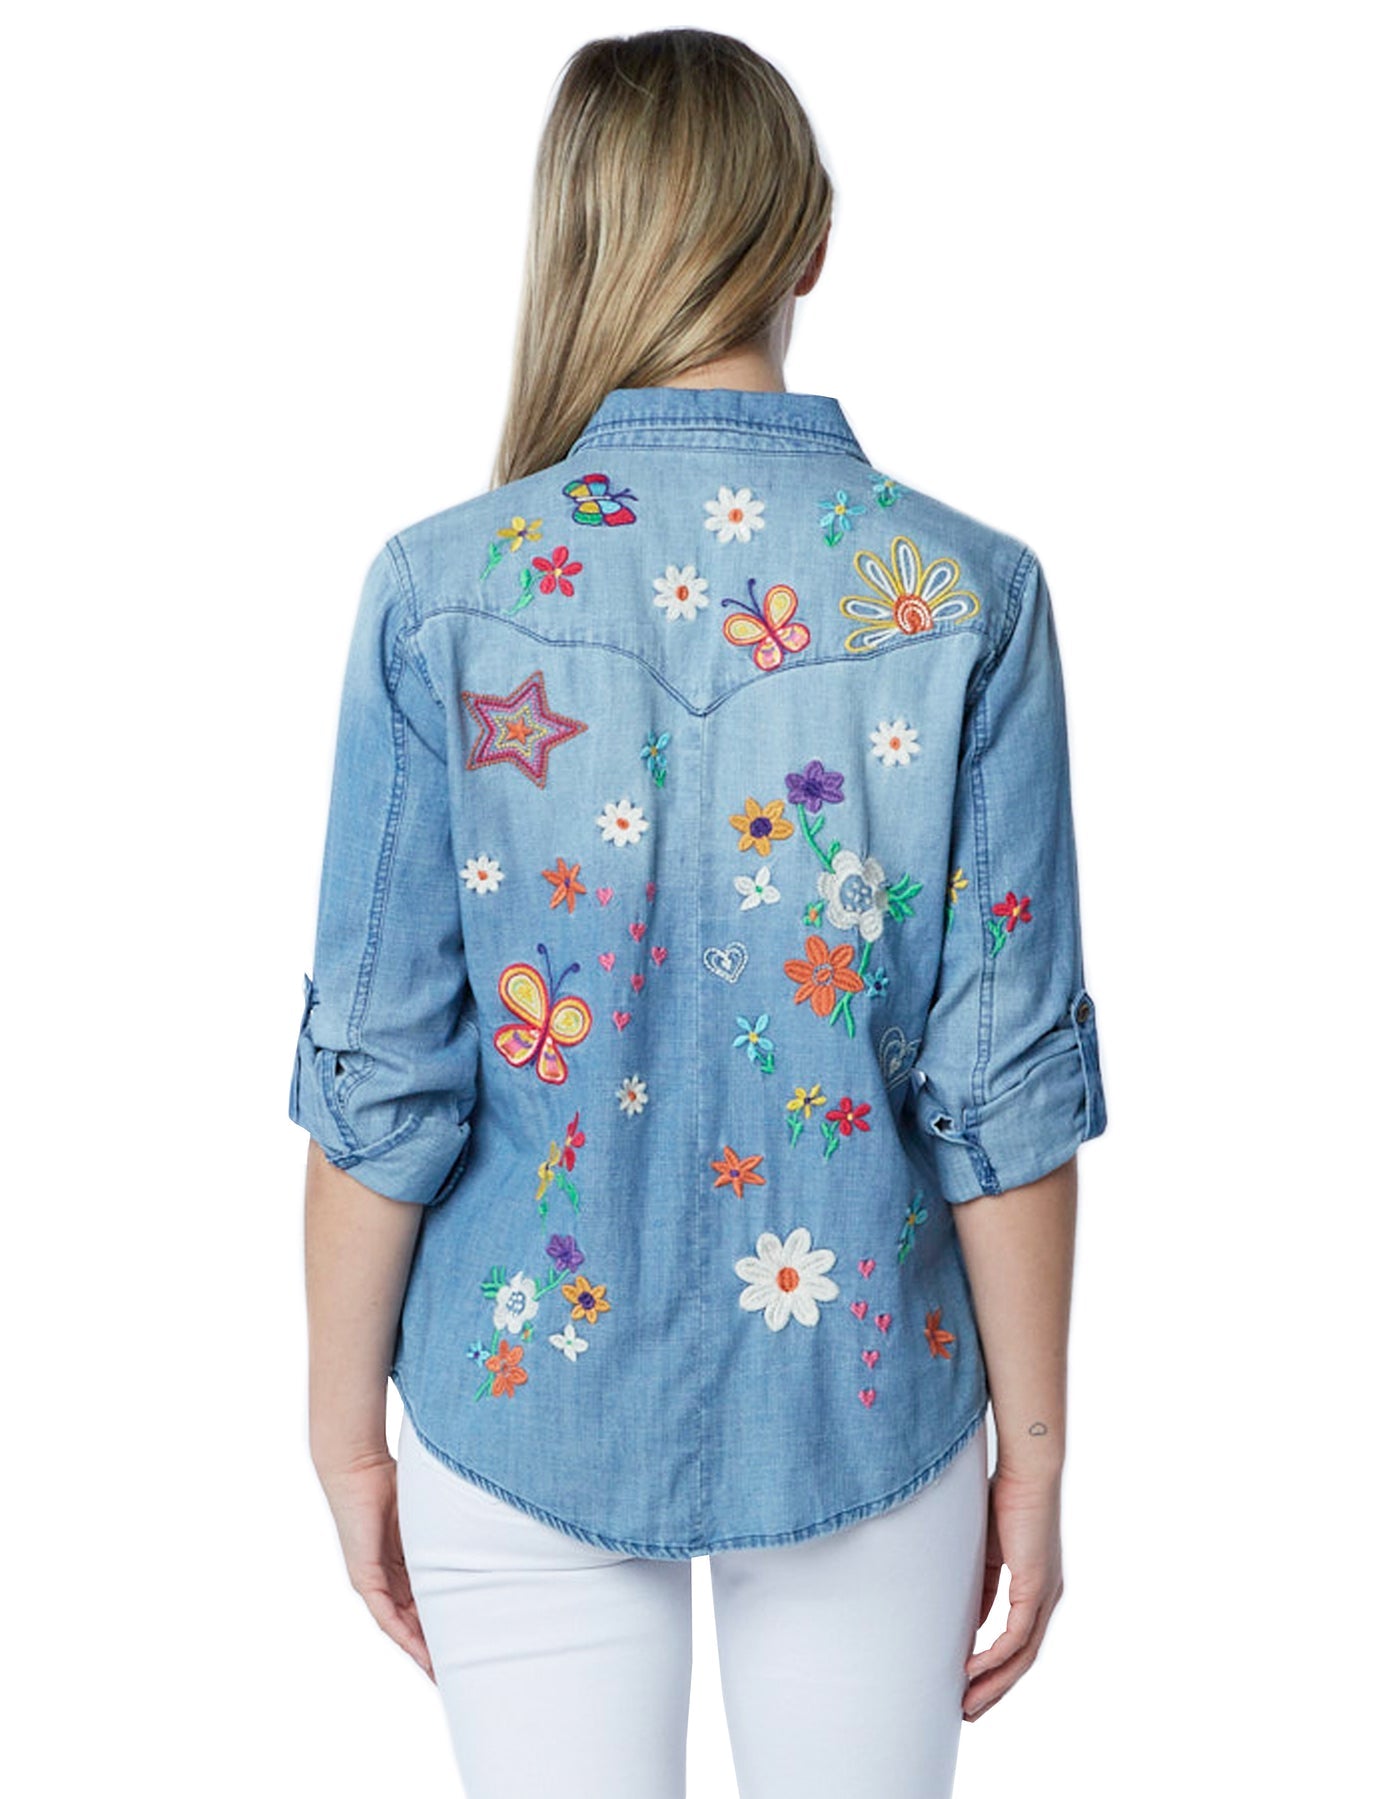 Kelly Sketchbook Star Butterfly & Floral Embroidery - Denim back